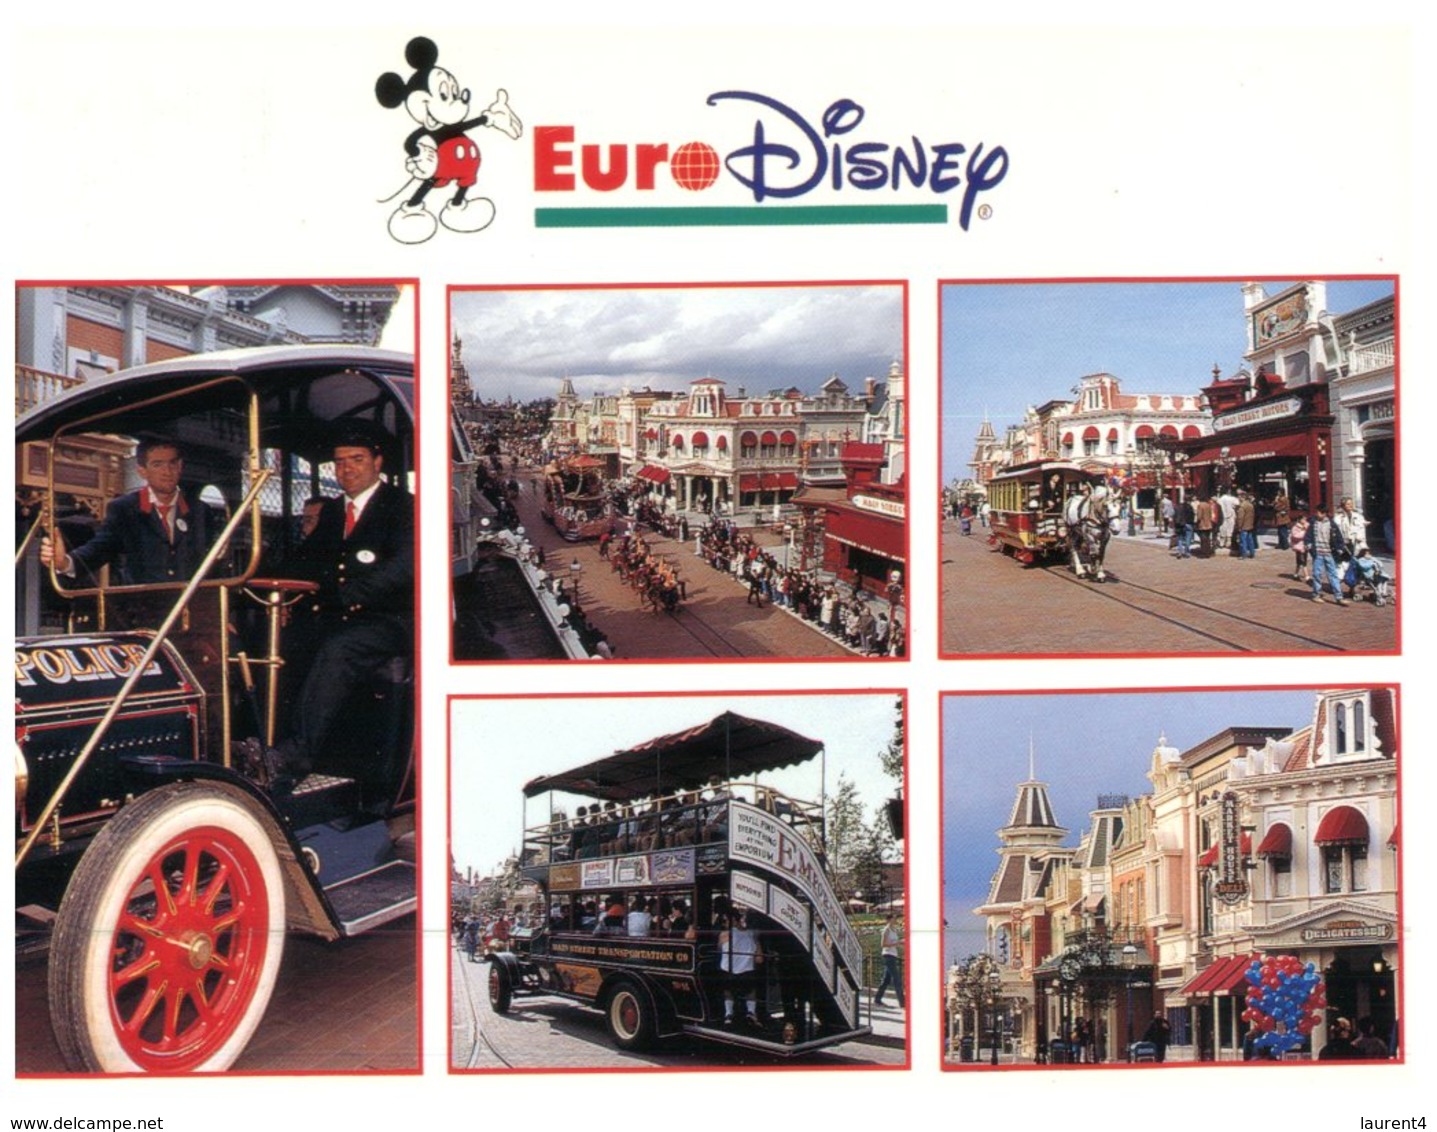 (325) France - Euro Disney - Main Street And Transport - Disneyland